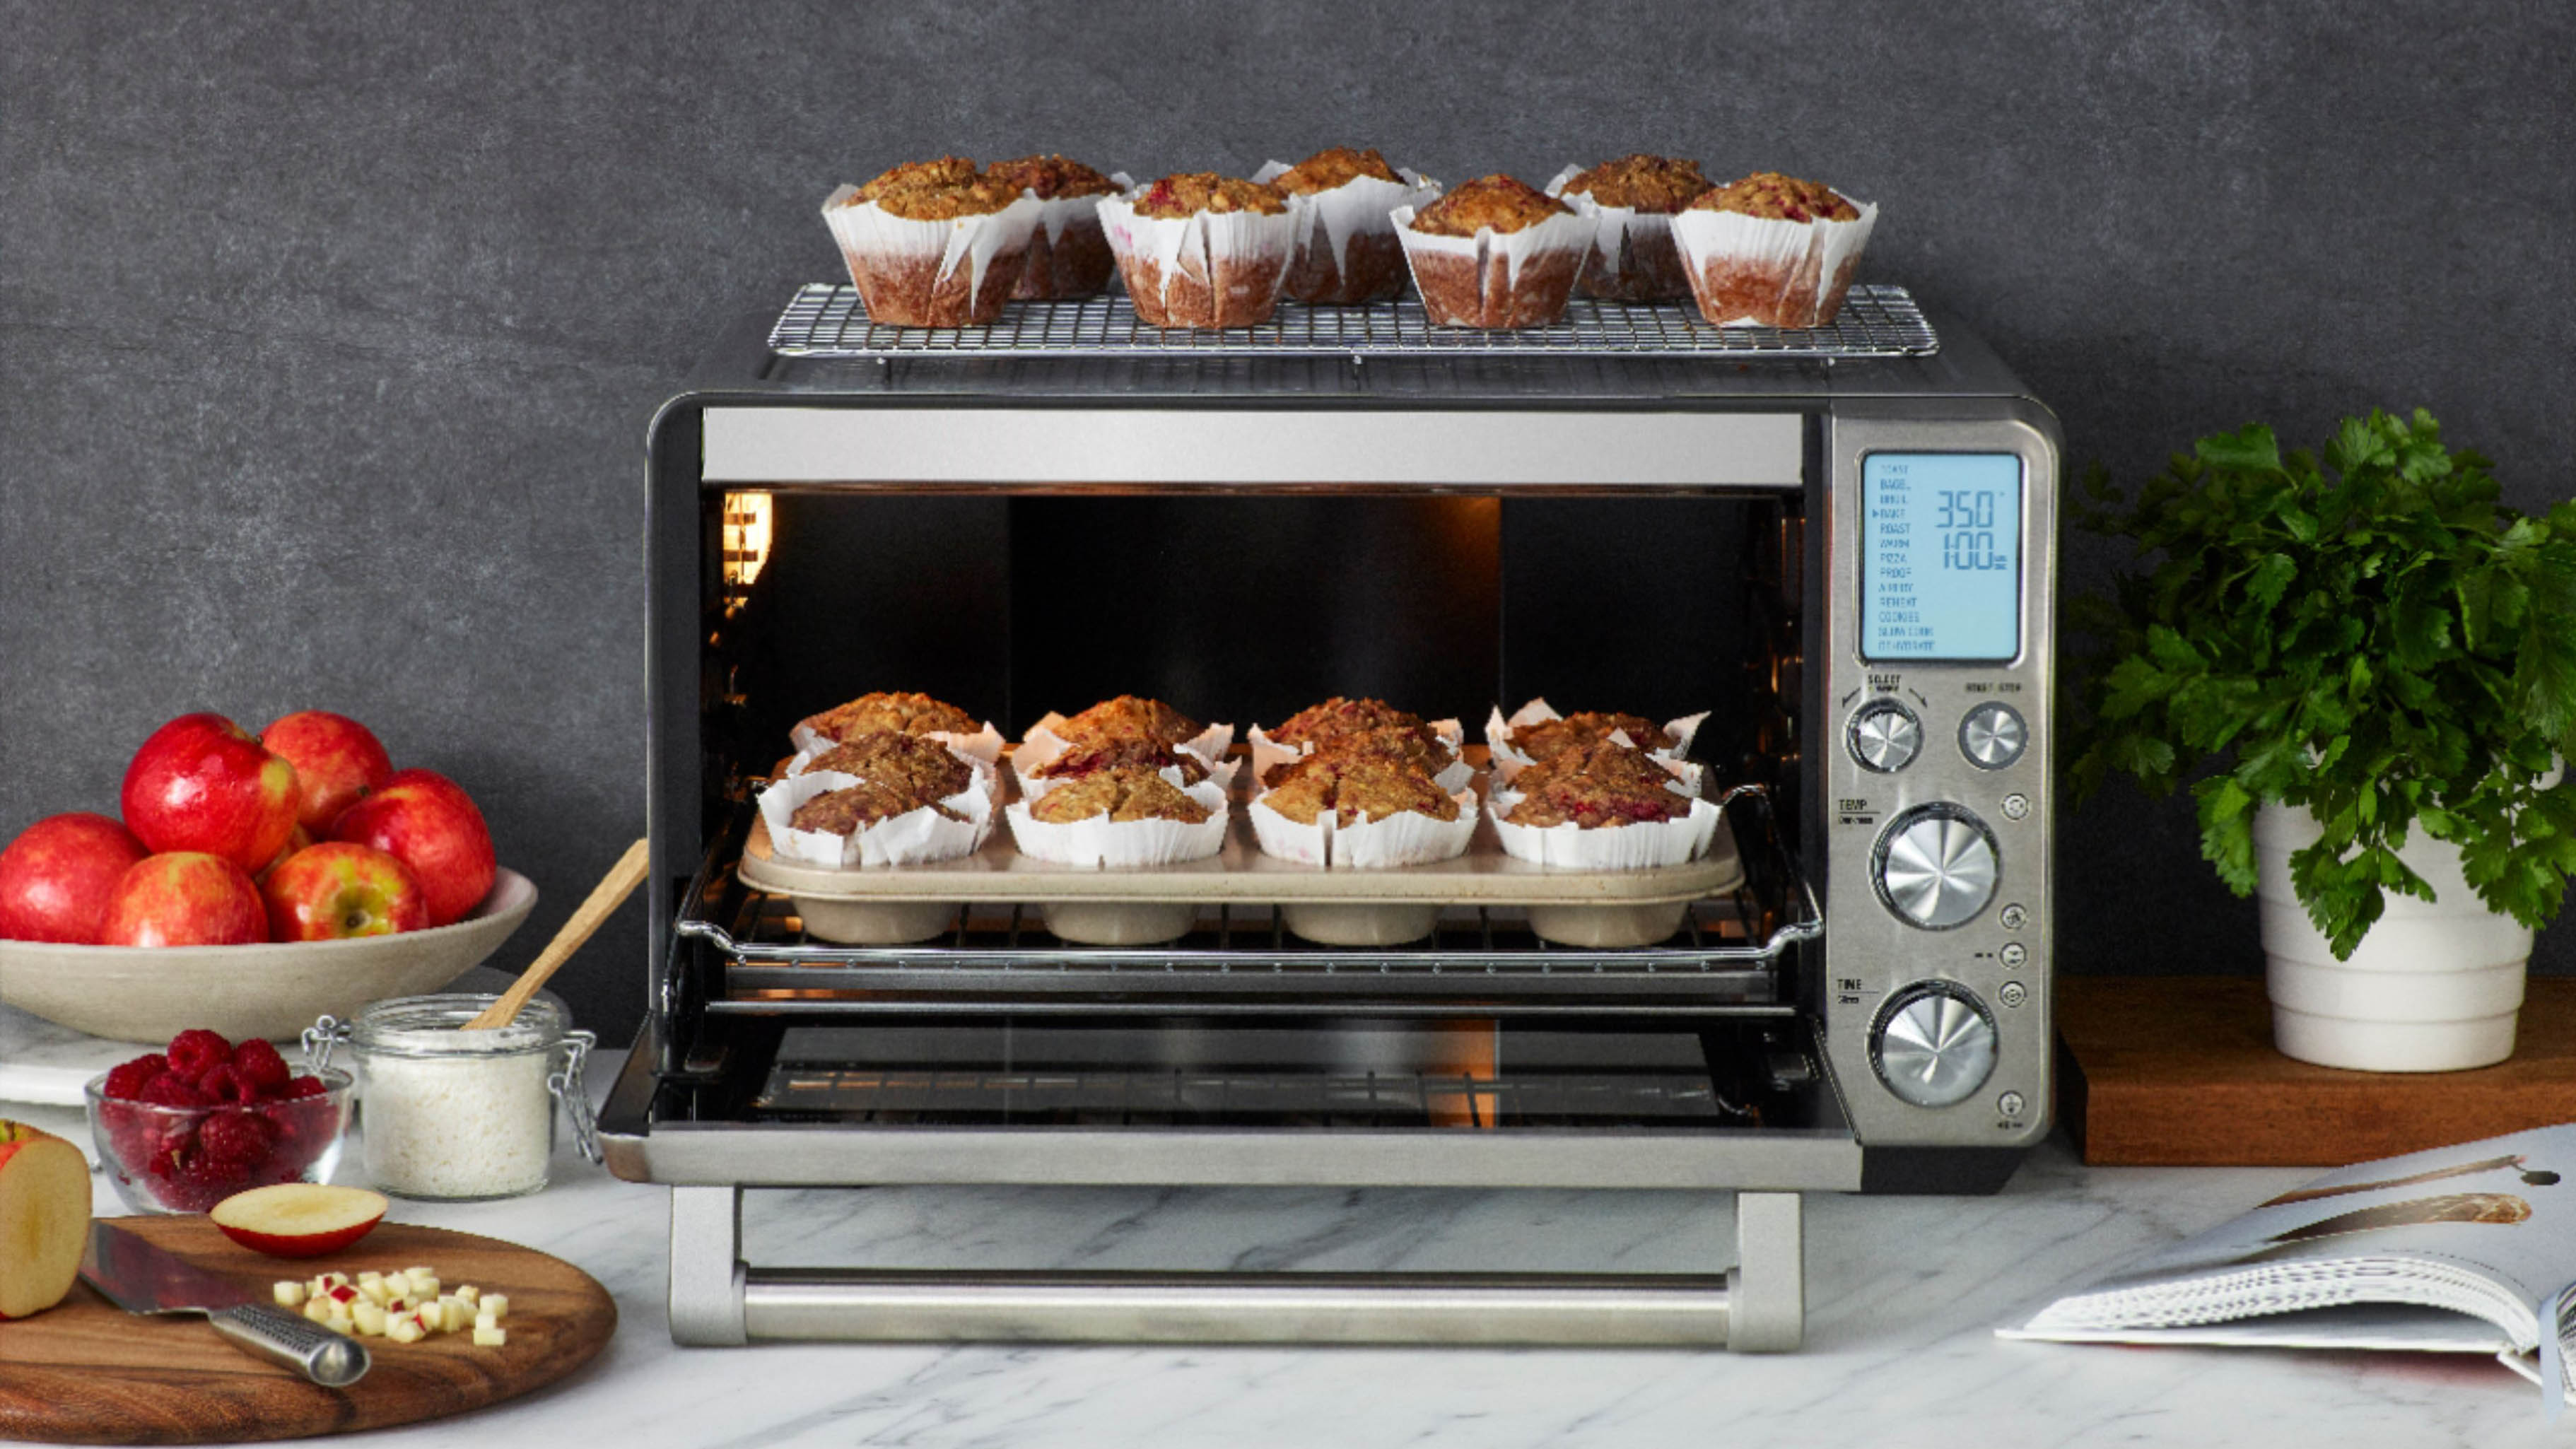 Breville Smart Oven Air Fryer Pro стоит на прилавке со свежими кексами